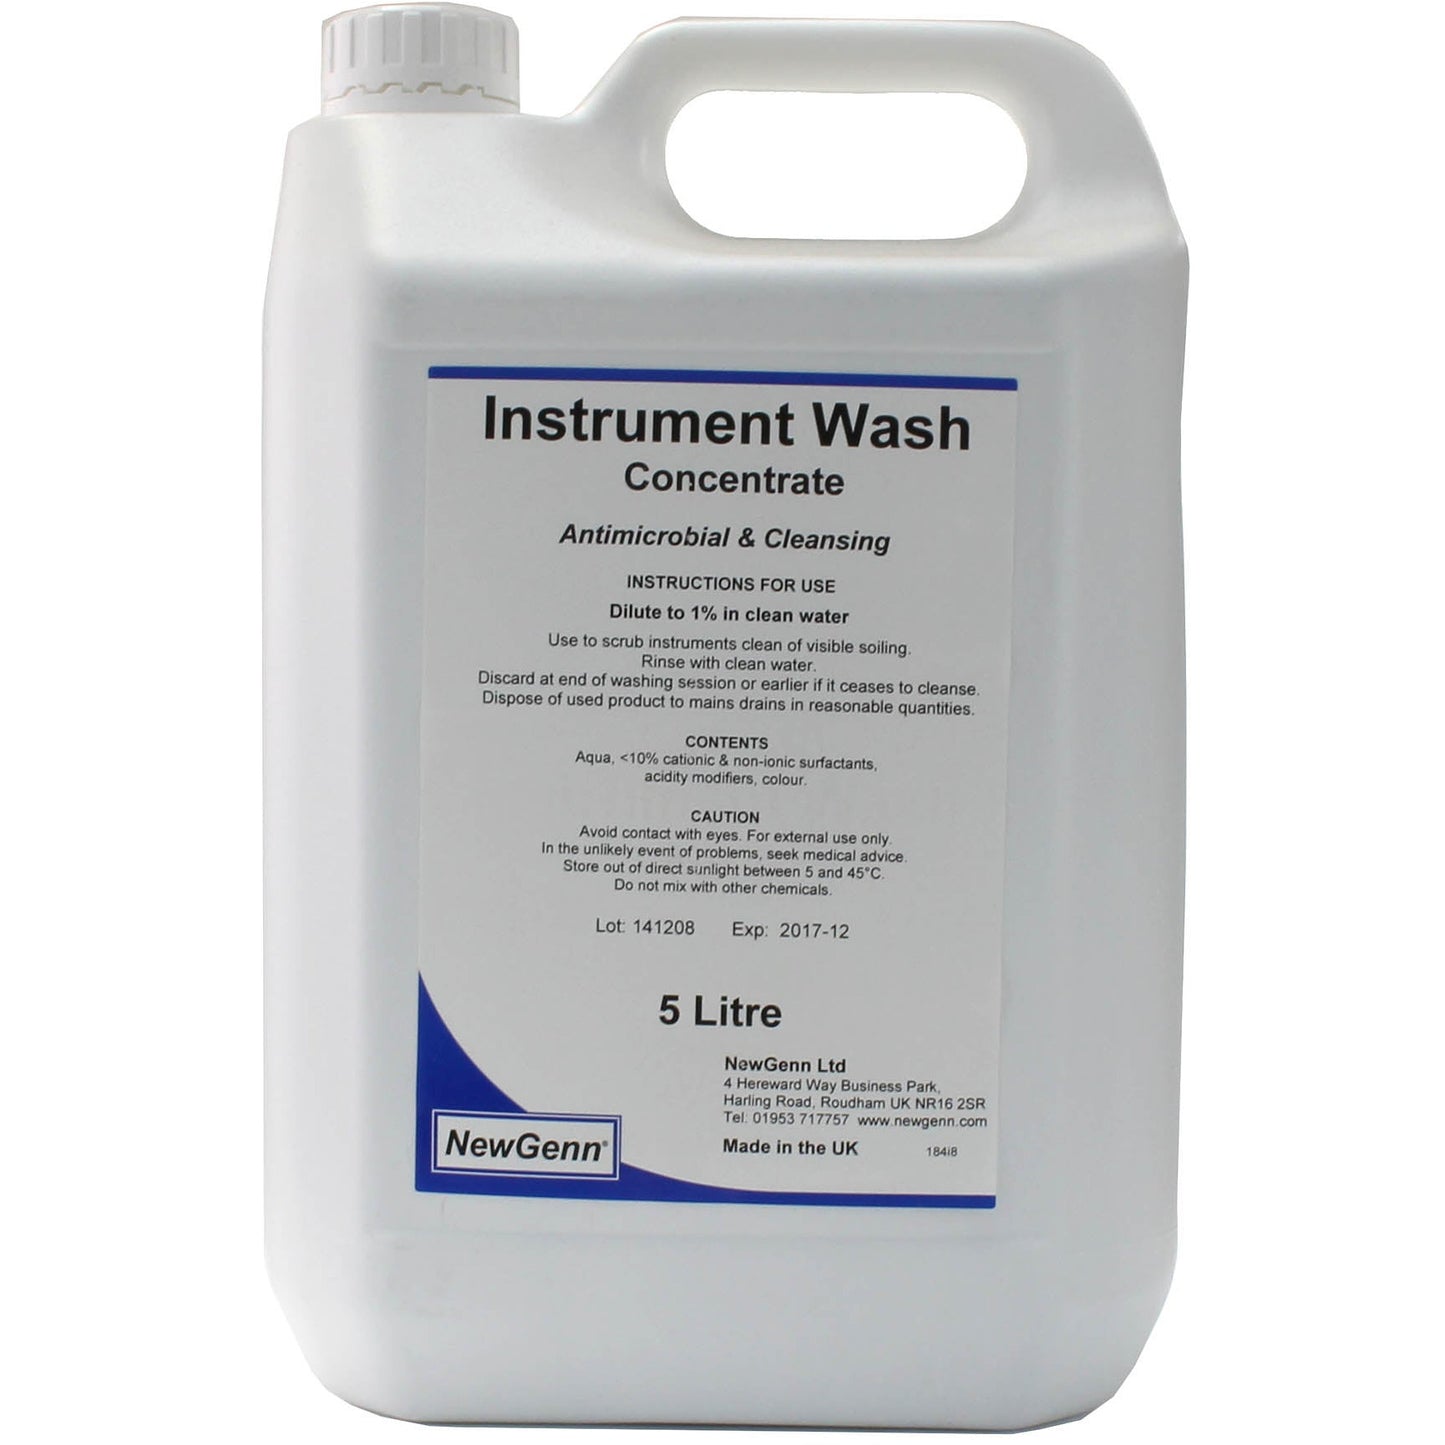 NewGenn Instrument Wash 5 Litre Hi Concentrate Dilute to 1%